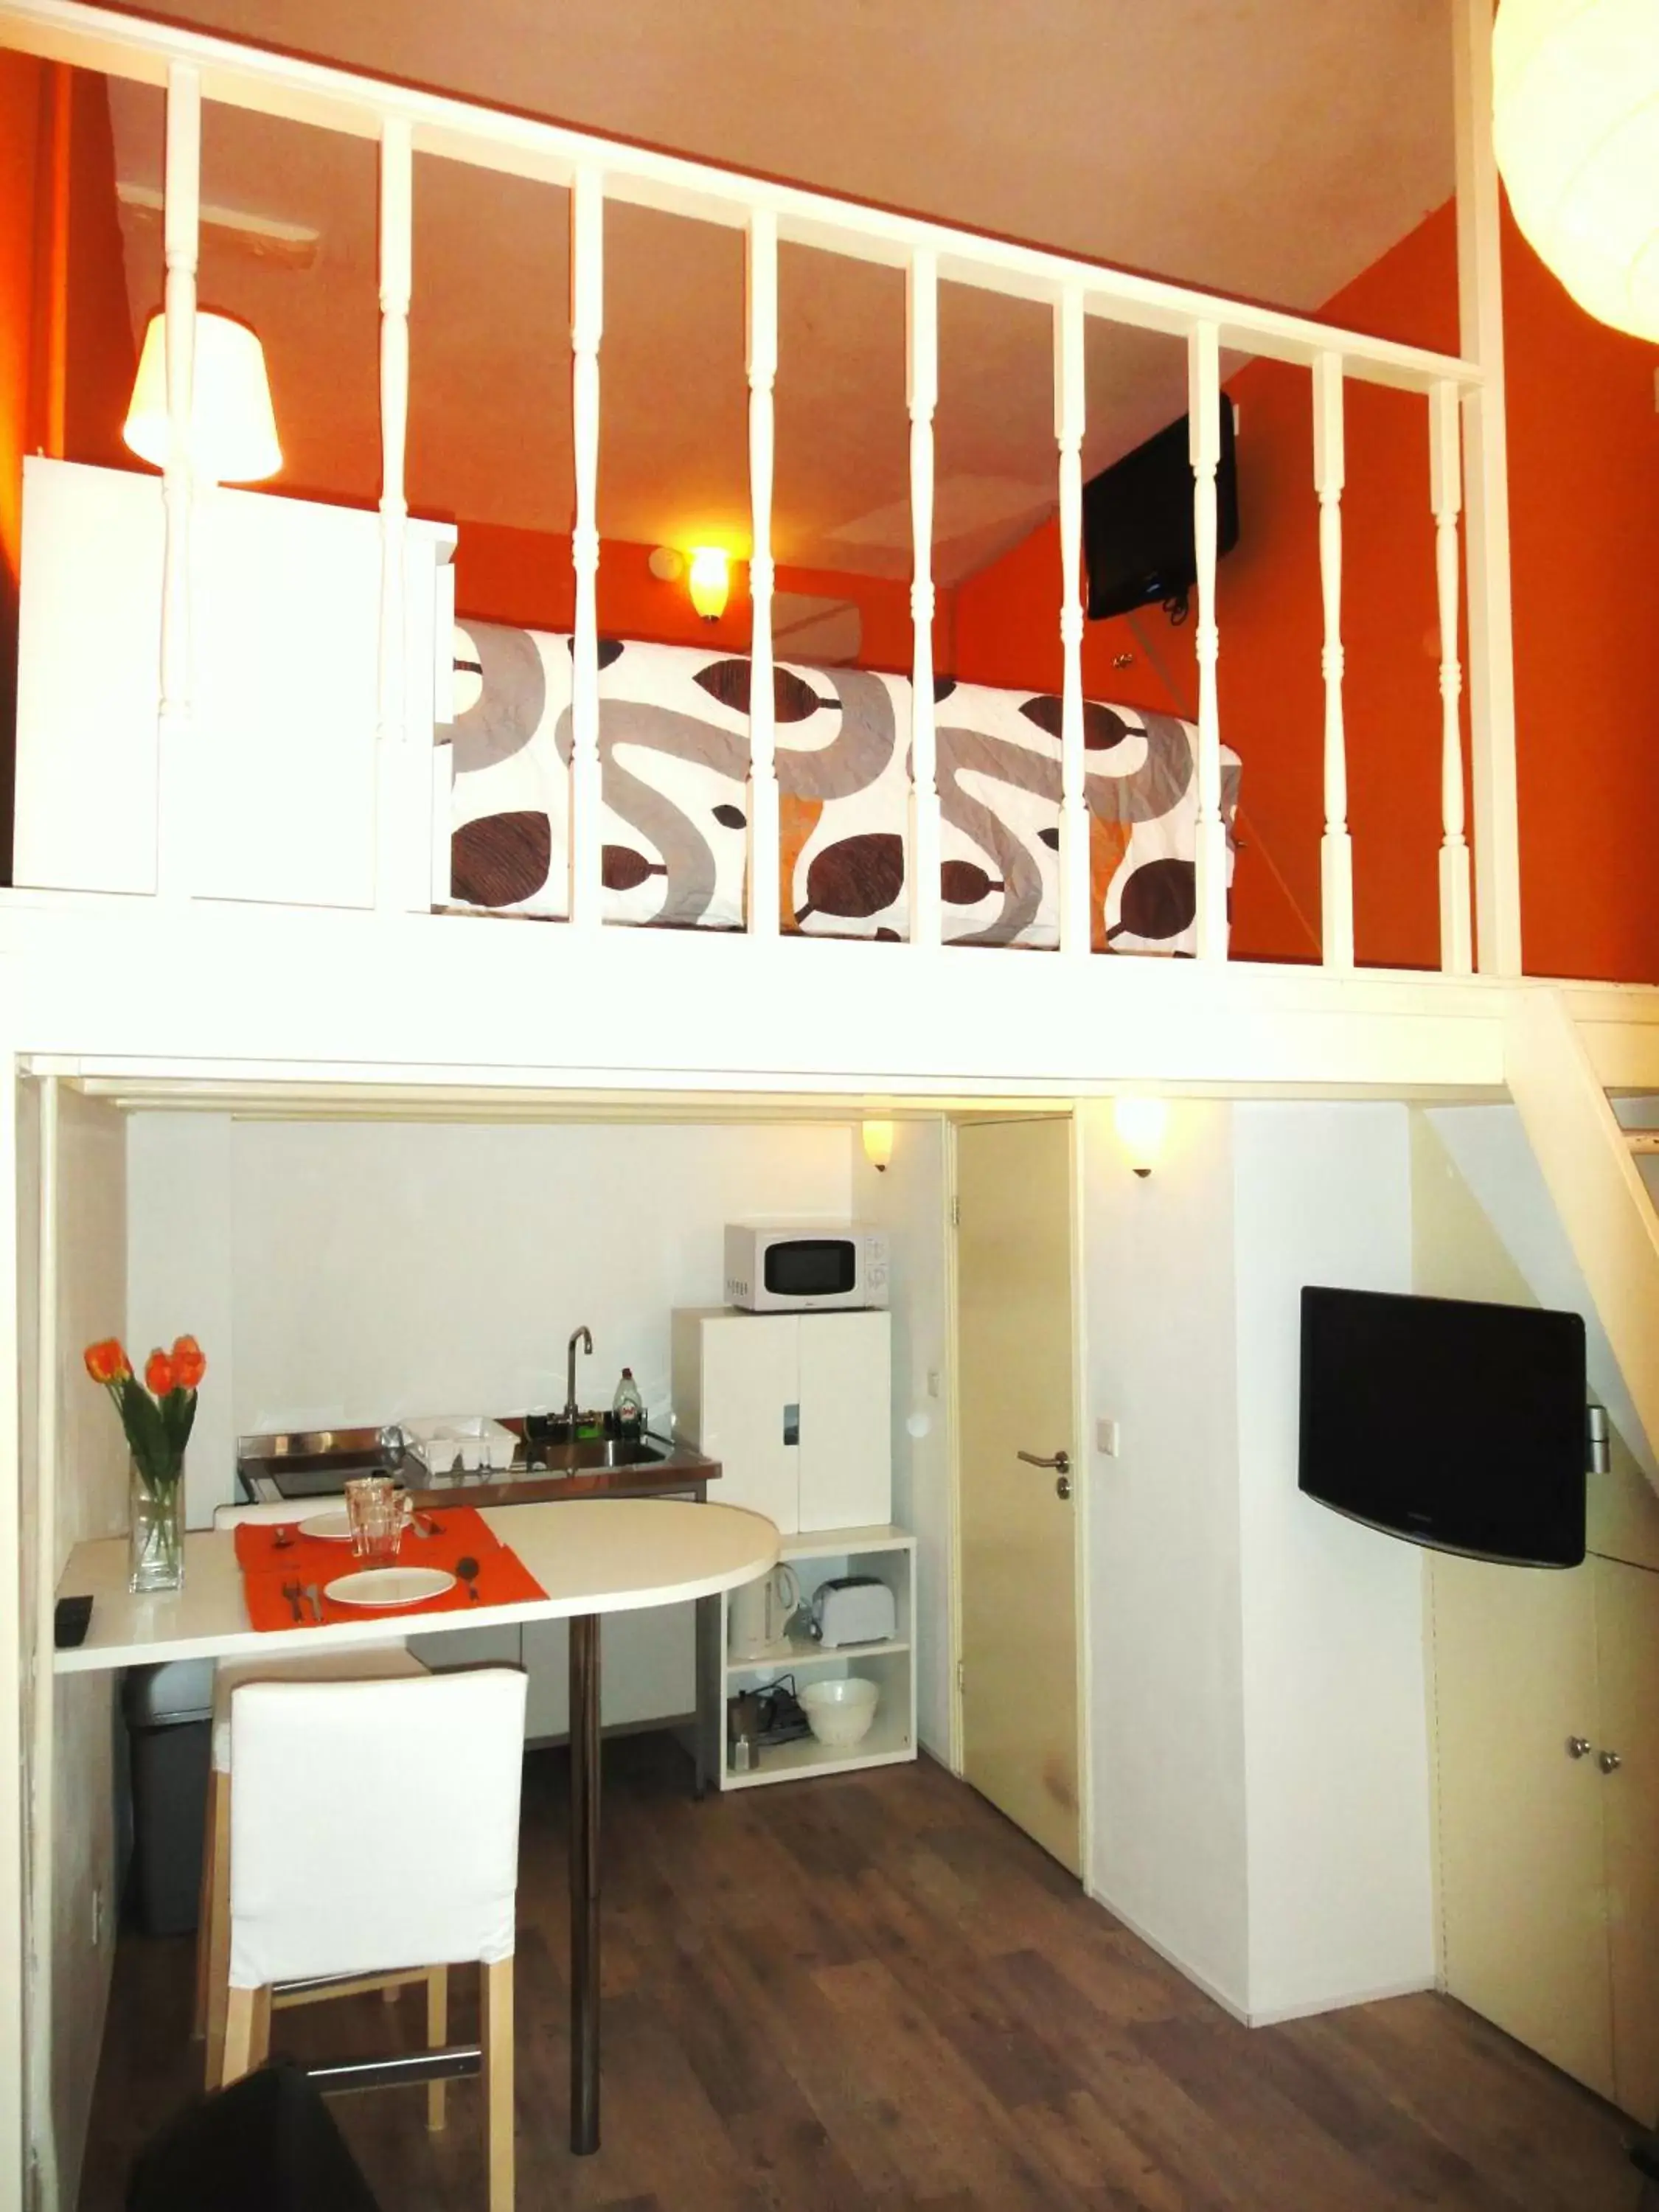 Photo of the whole room, Kitchen/Kitchenette in Orange Suite Studio